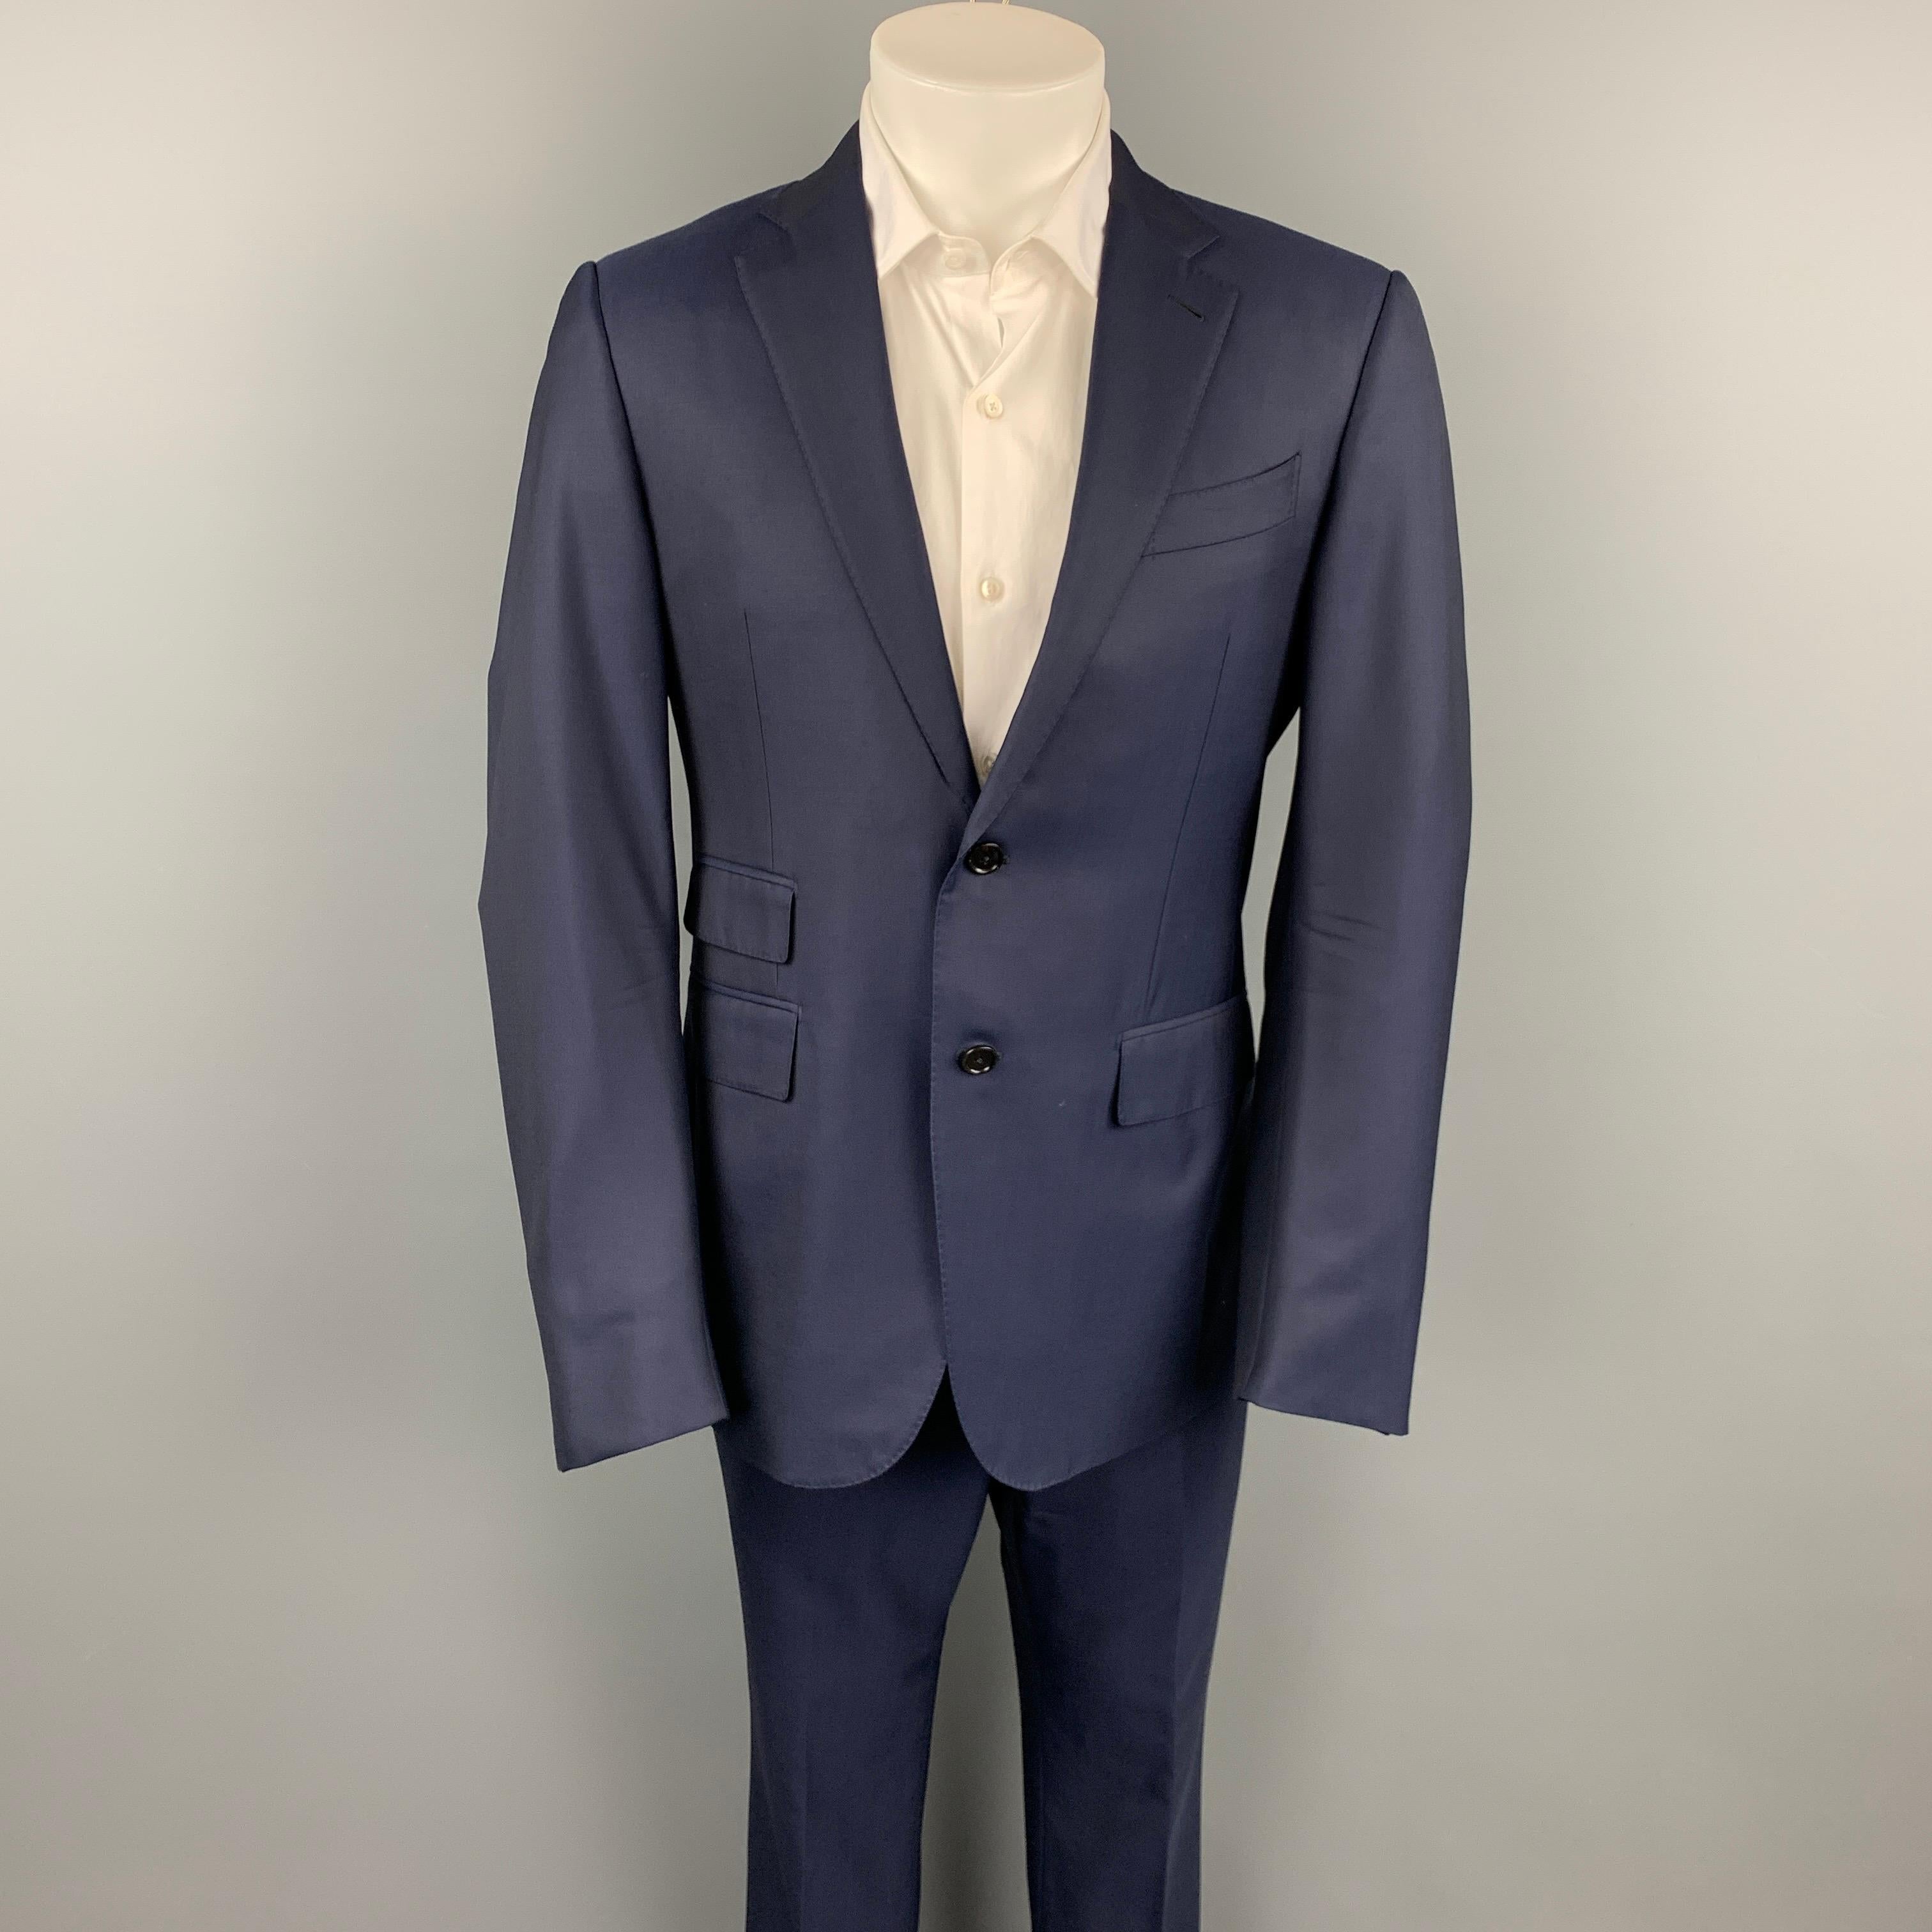 ERMENEGILDO ZEGNA for WILKES BASHFORD Size 40 Navy Wool Notch Lapel Suit 6